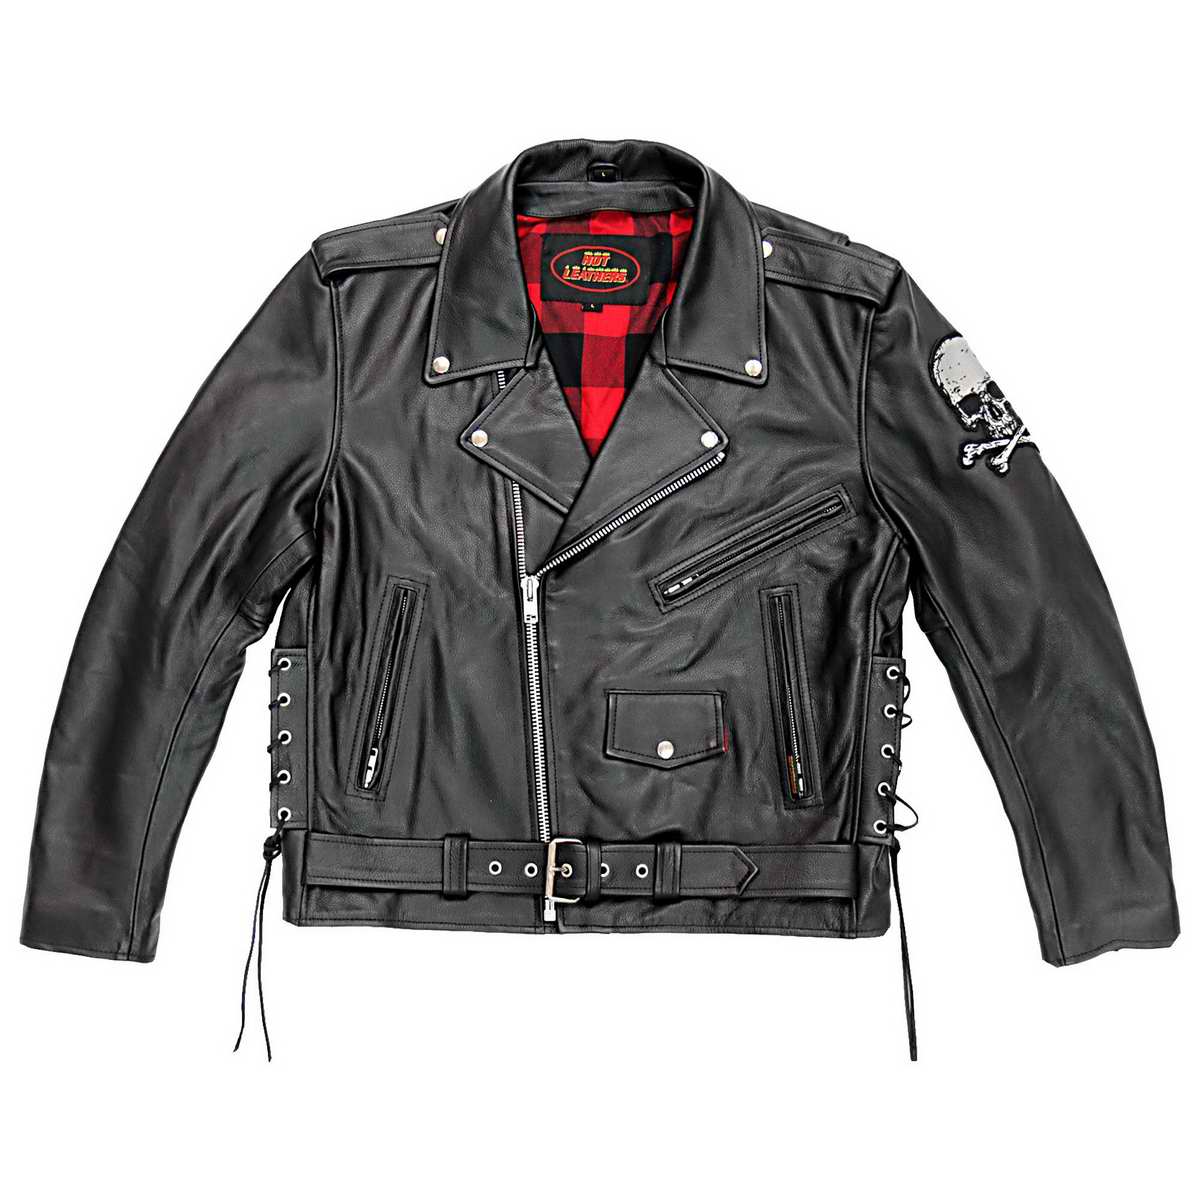 Hot Leathers JKM2001 Men’s Black ‘Skull And Crossbones' Motorcycle Leather Jacket